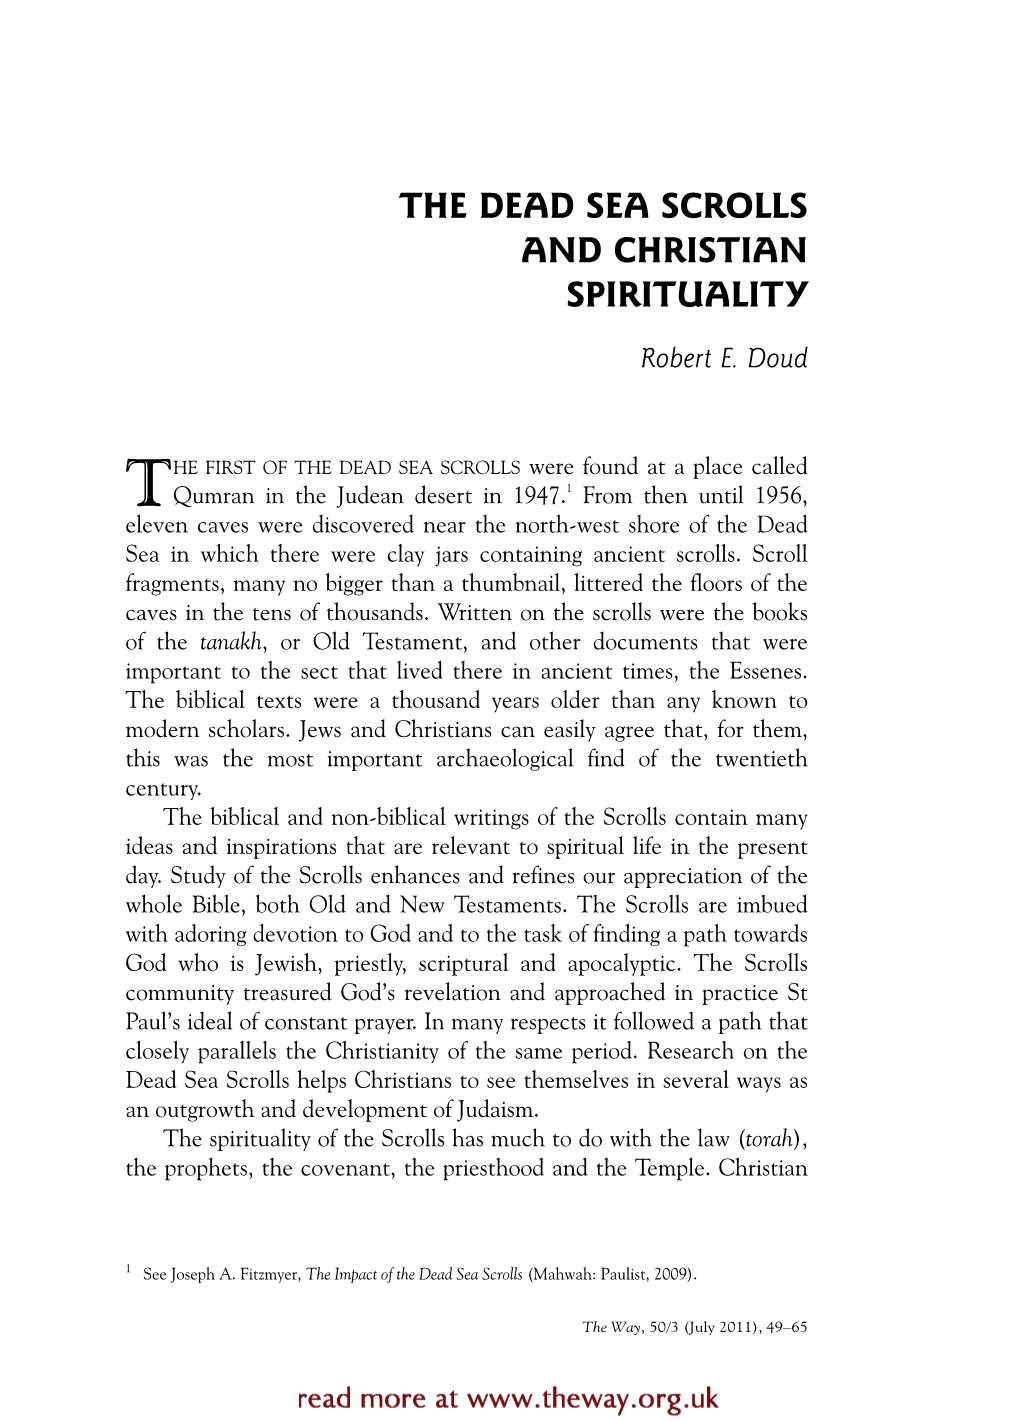 The Dead Sea Scrolls and Christian Spirituality